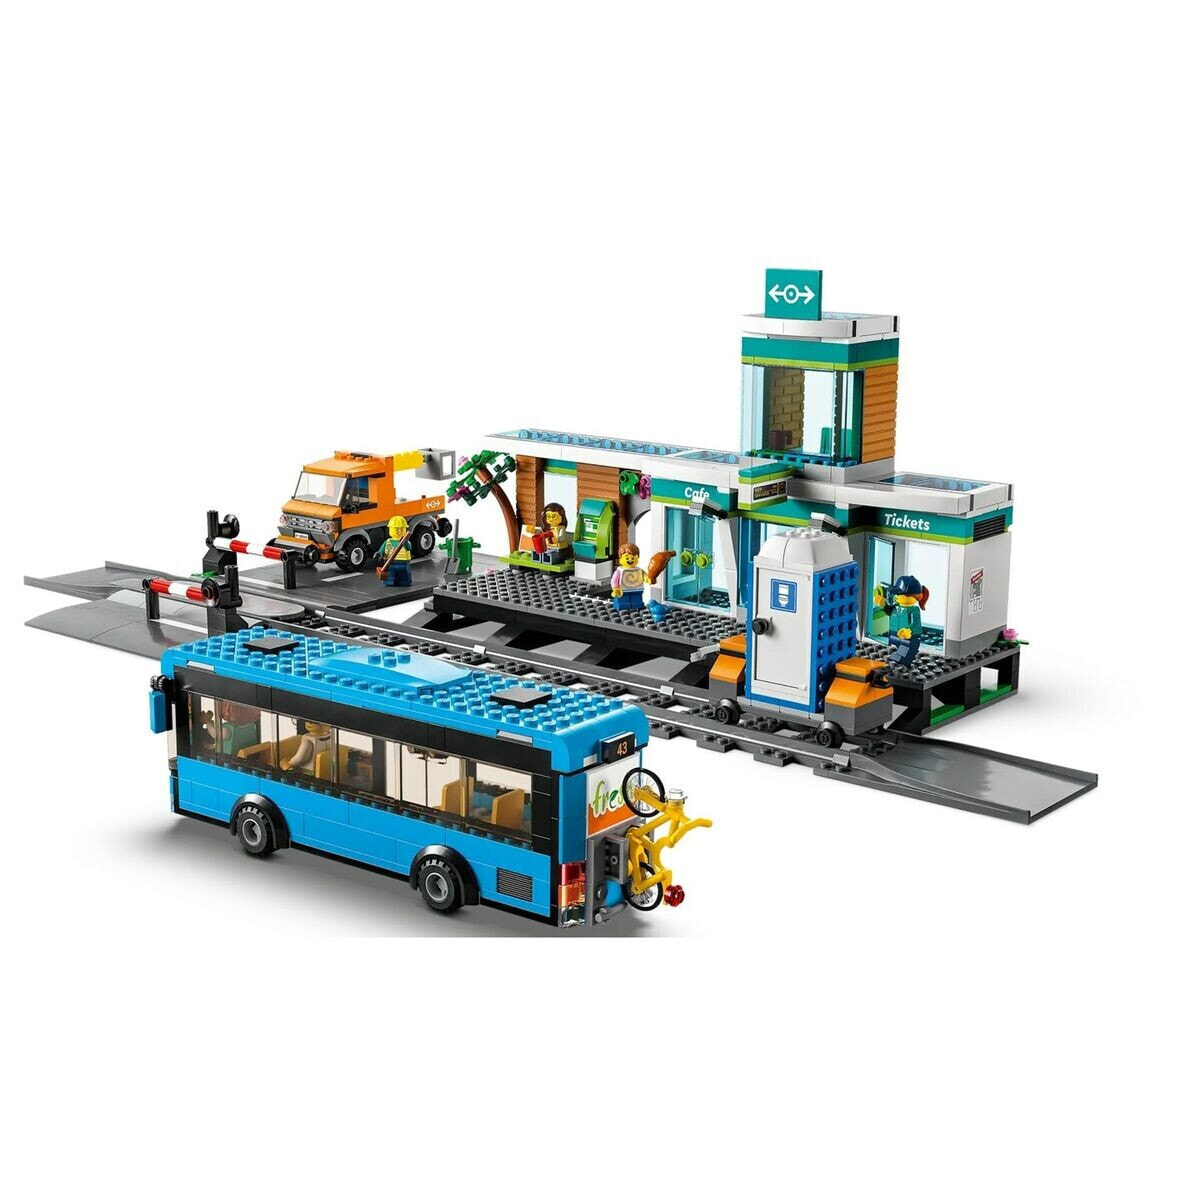 Construction set Lego 60335 907 piezas Multicolour